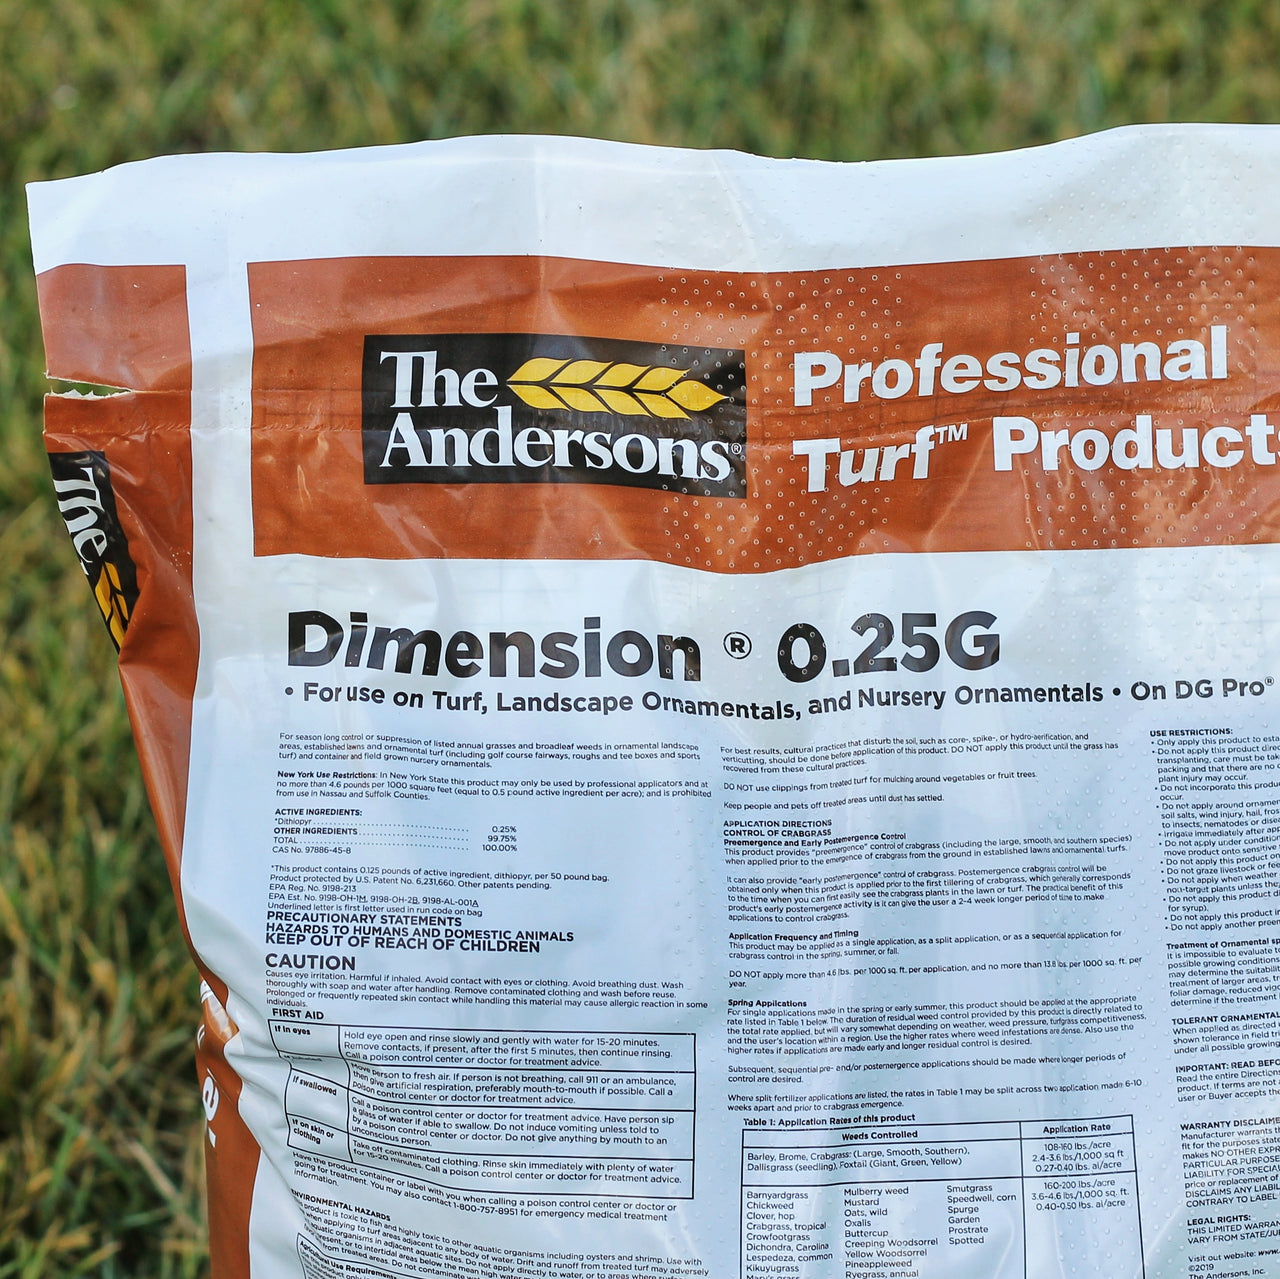 Dimension 0.25G DG Pro: Superior Pre-emergent for Grassy and Broadleaf Weeds